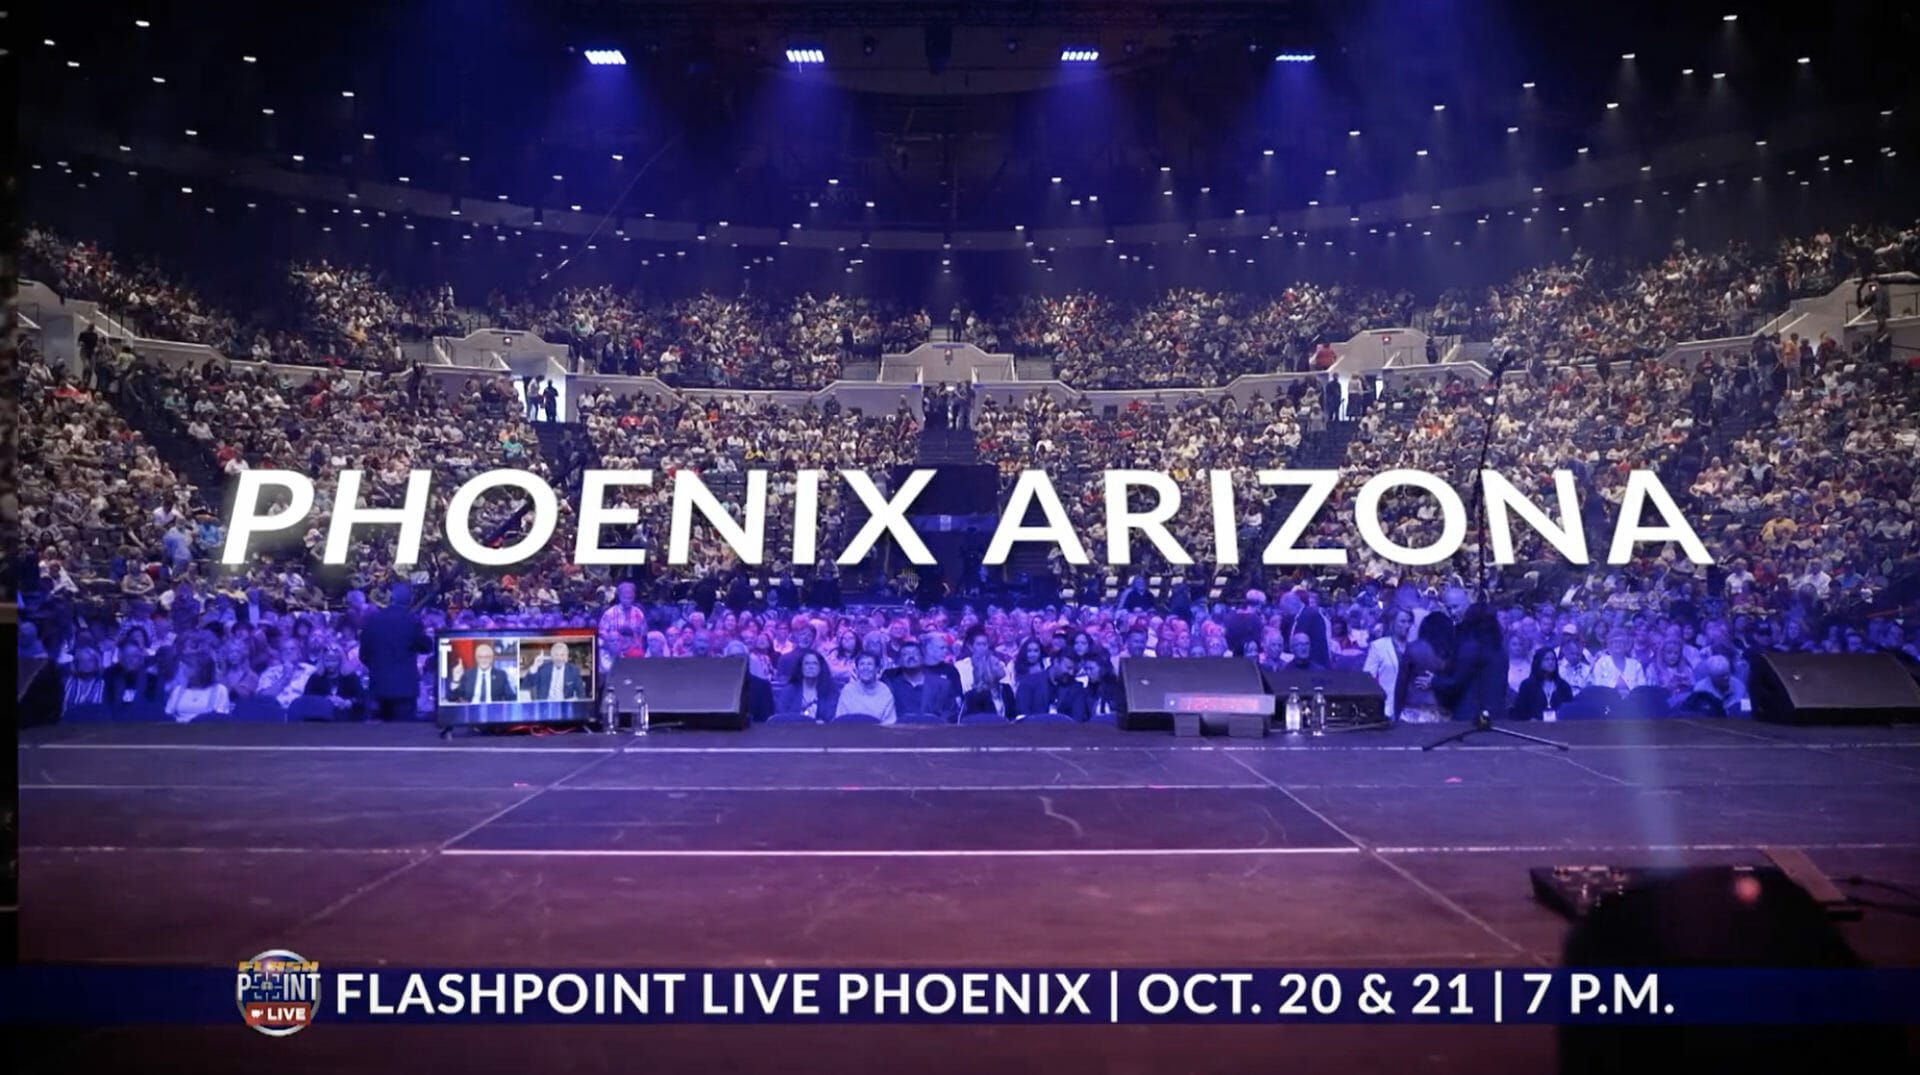 Flashpoint live in Phoenix